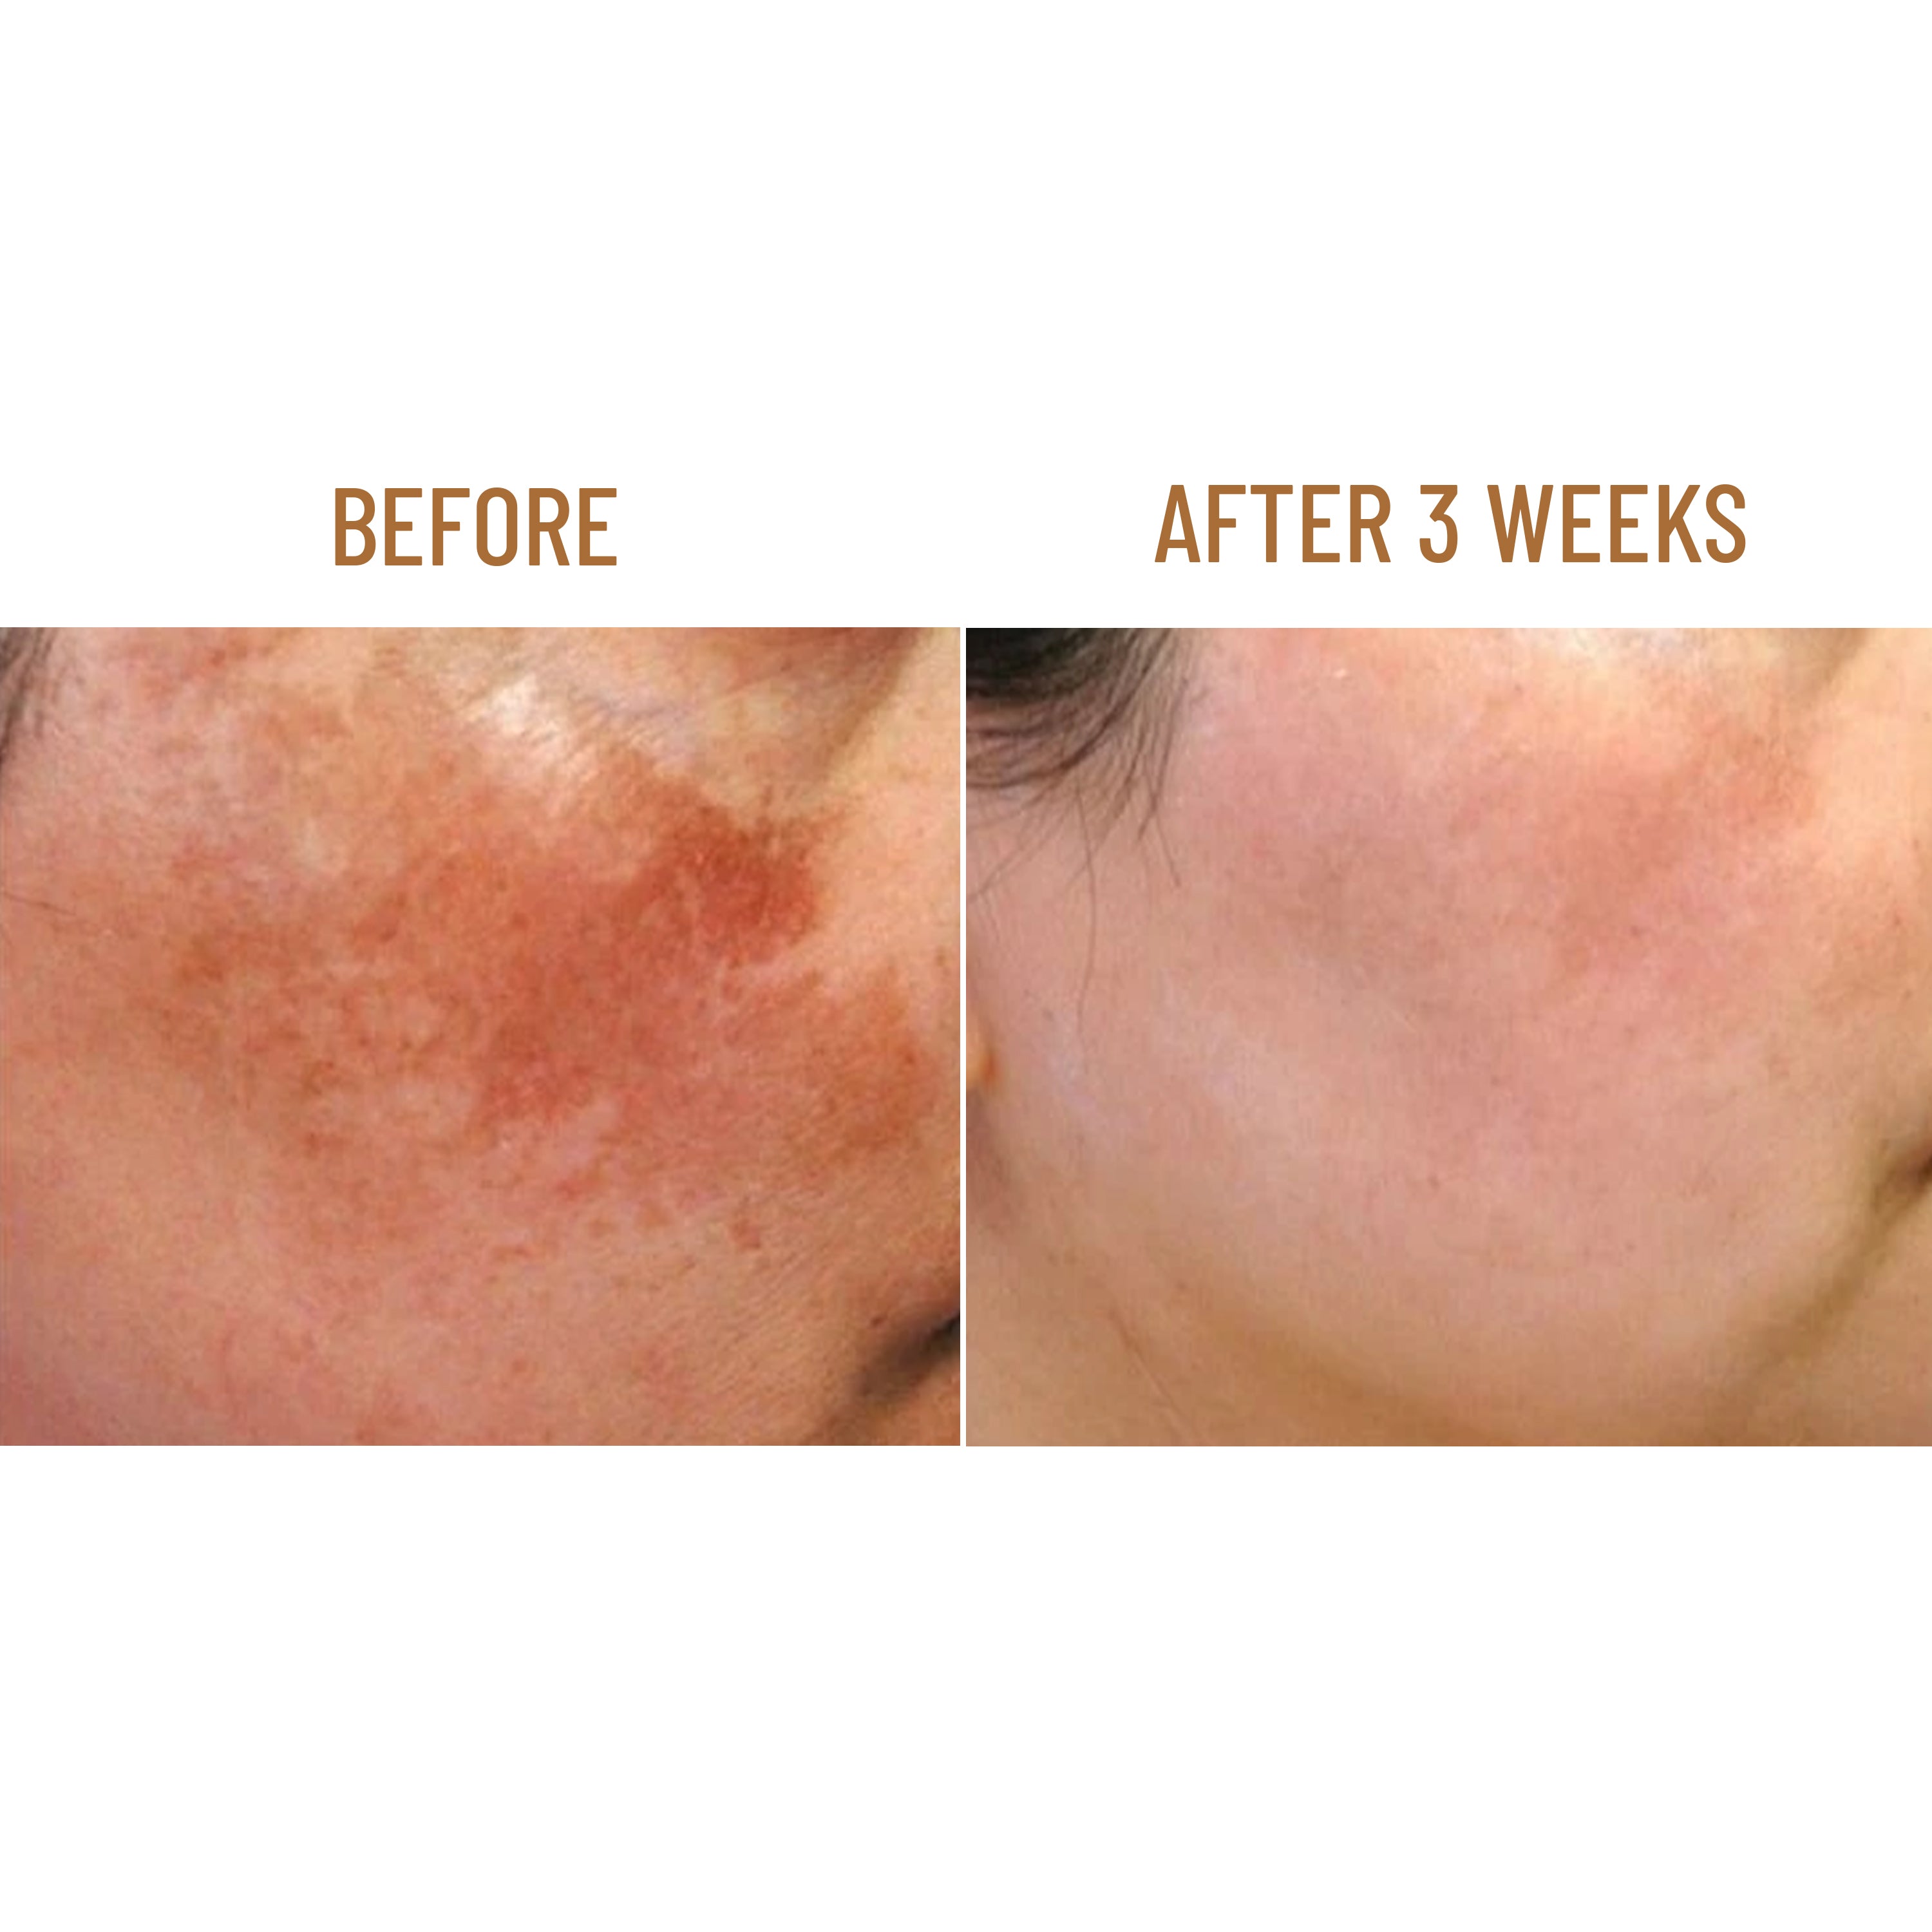 Kasumi Abera Skin Glowing Cream - Pack of 1, 2 or 3 - Anti-aging, Facial Skin Care, Extensive Moisturizer